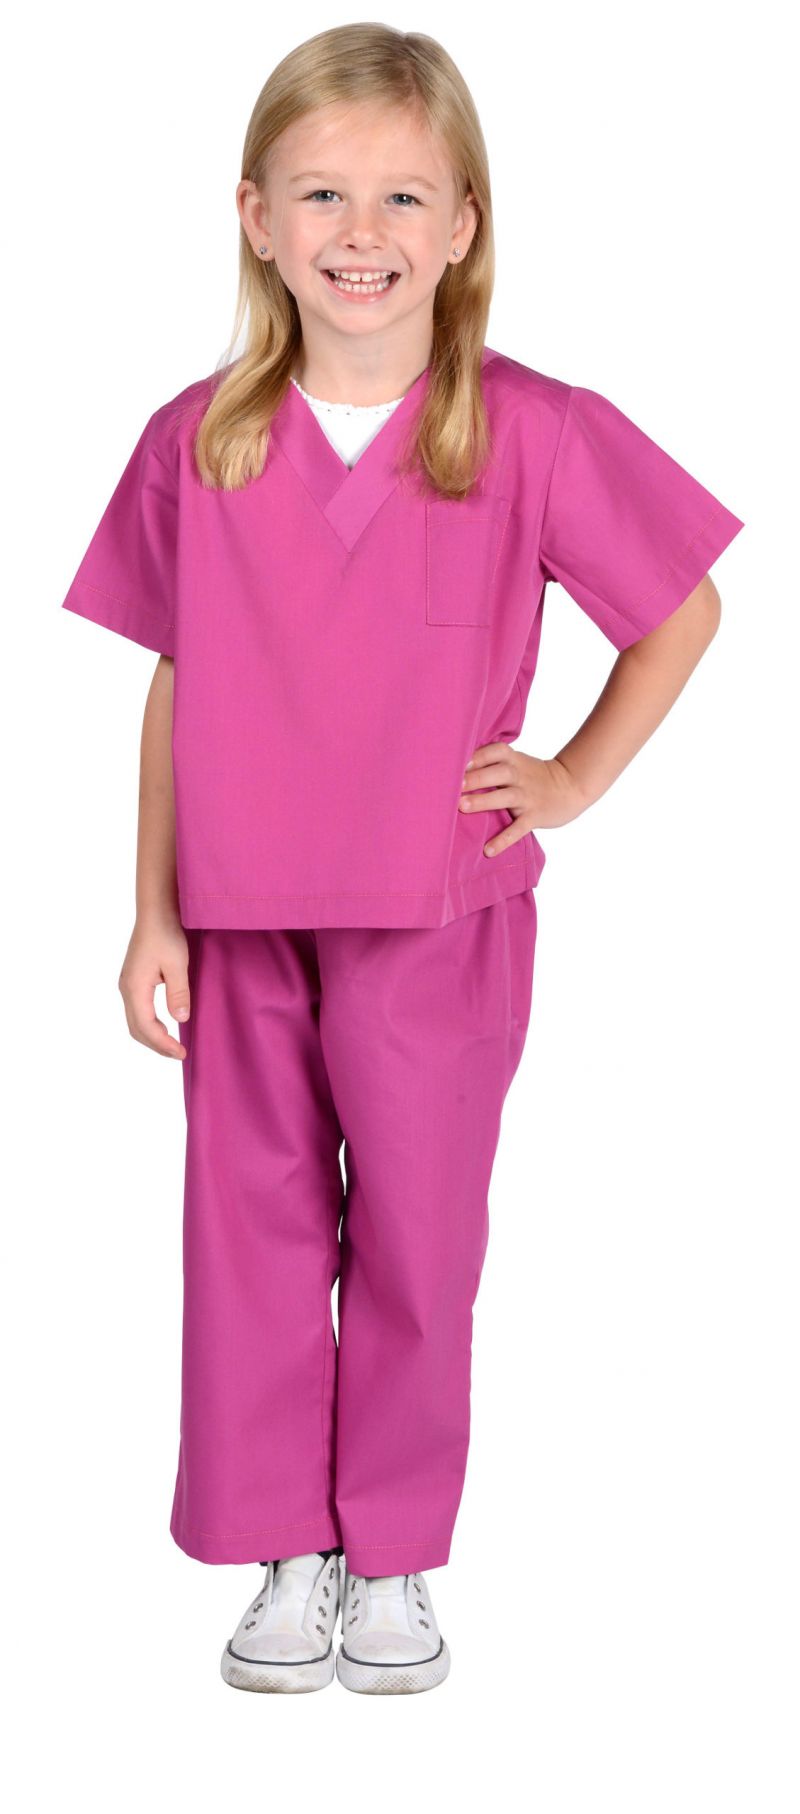 Dr. Scrubs Size 8/10 - 54-86 Lbs, Height 48-56" Fuchsia Pink